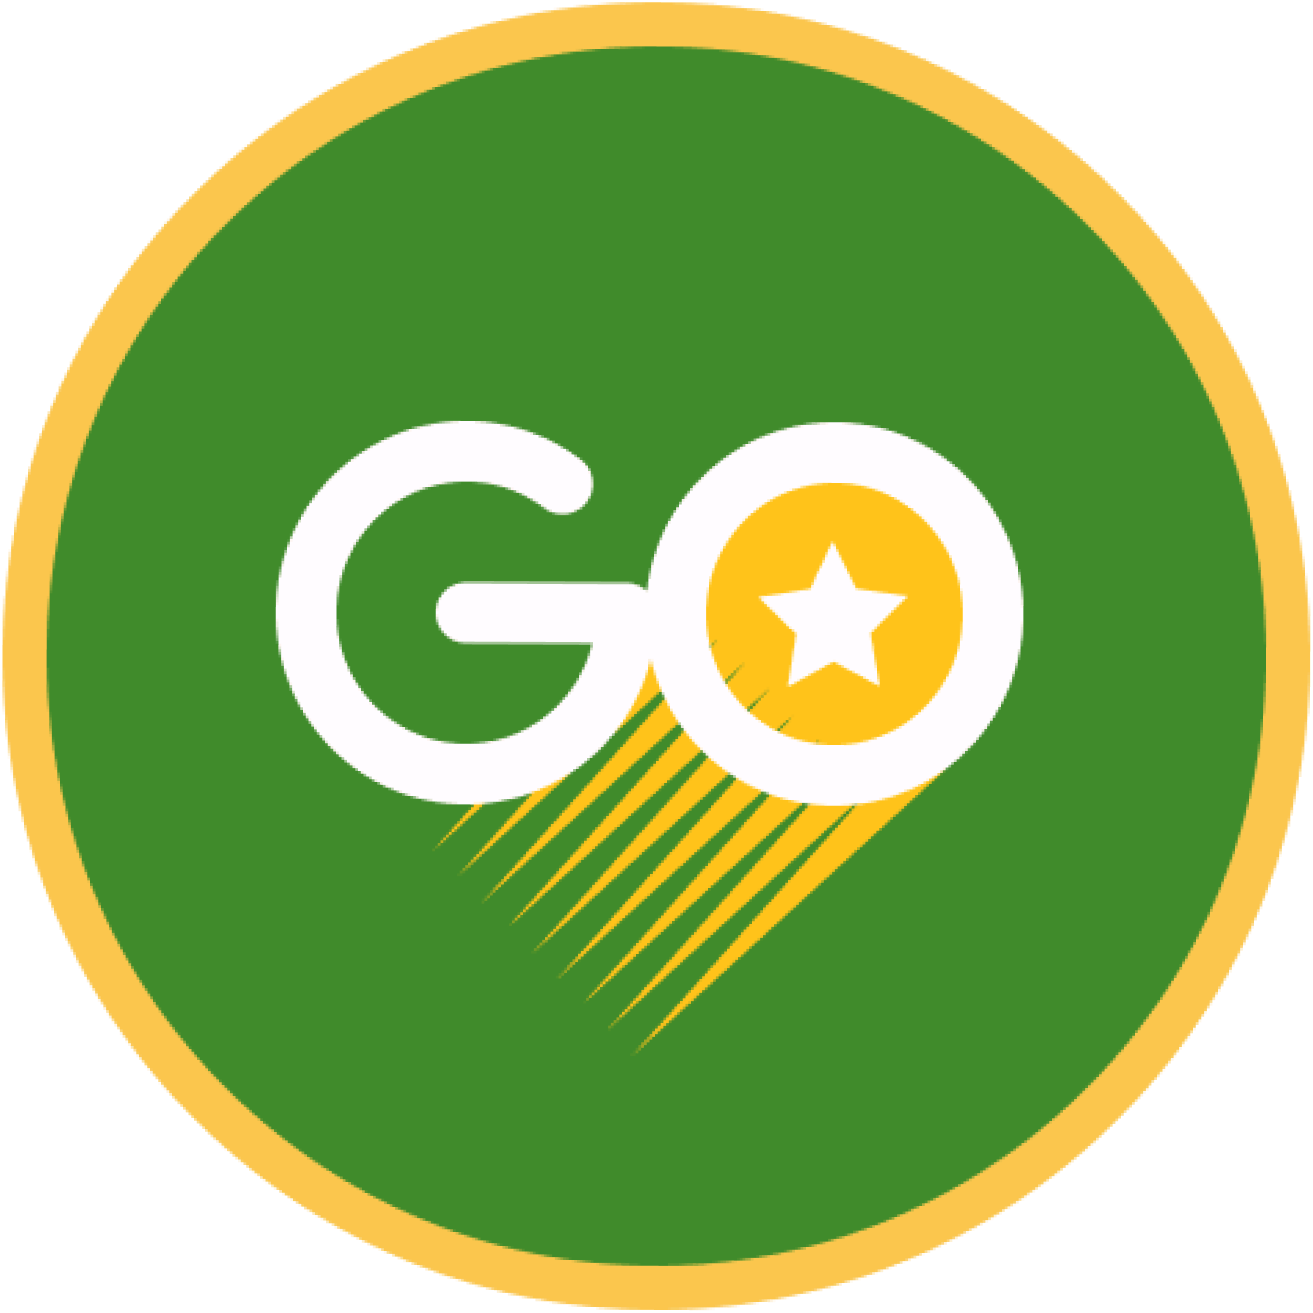 goplaybook app's logo